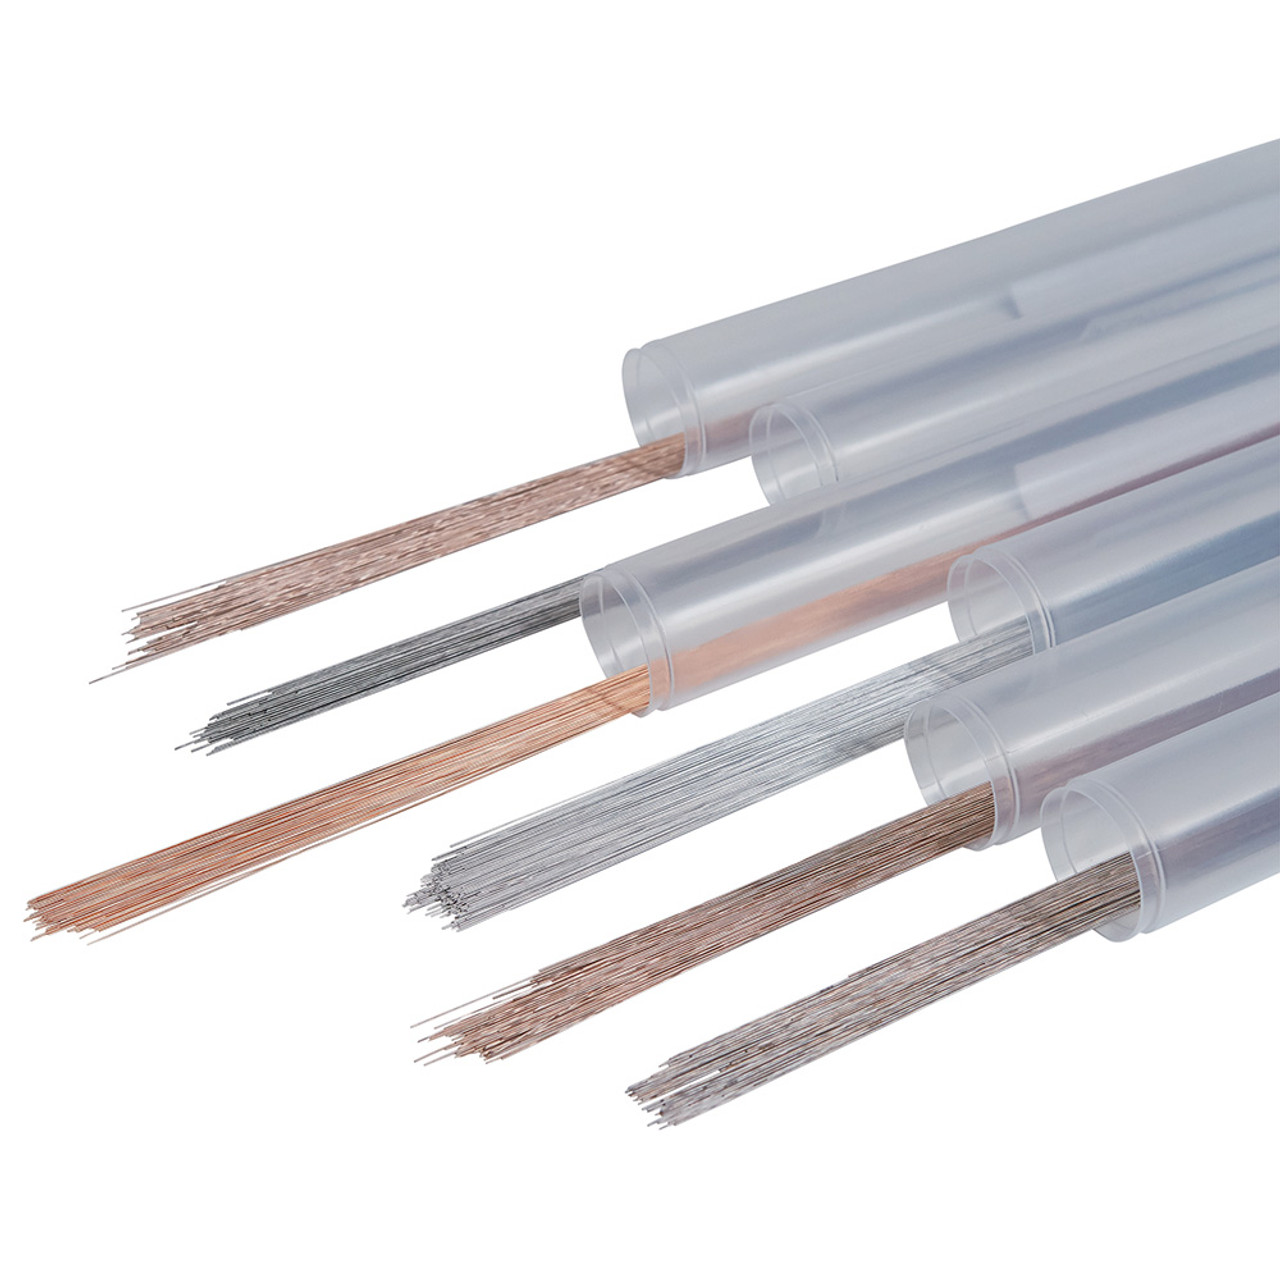 Laser Welding Wires - 5356, 0.6mm pkg. of 25 grams = approx. 104 wires